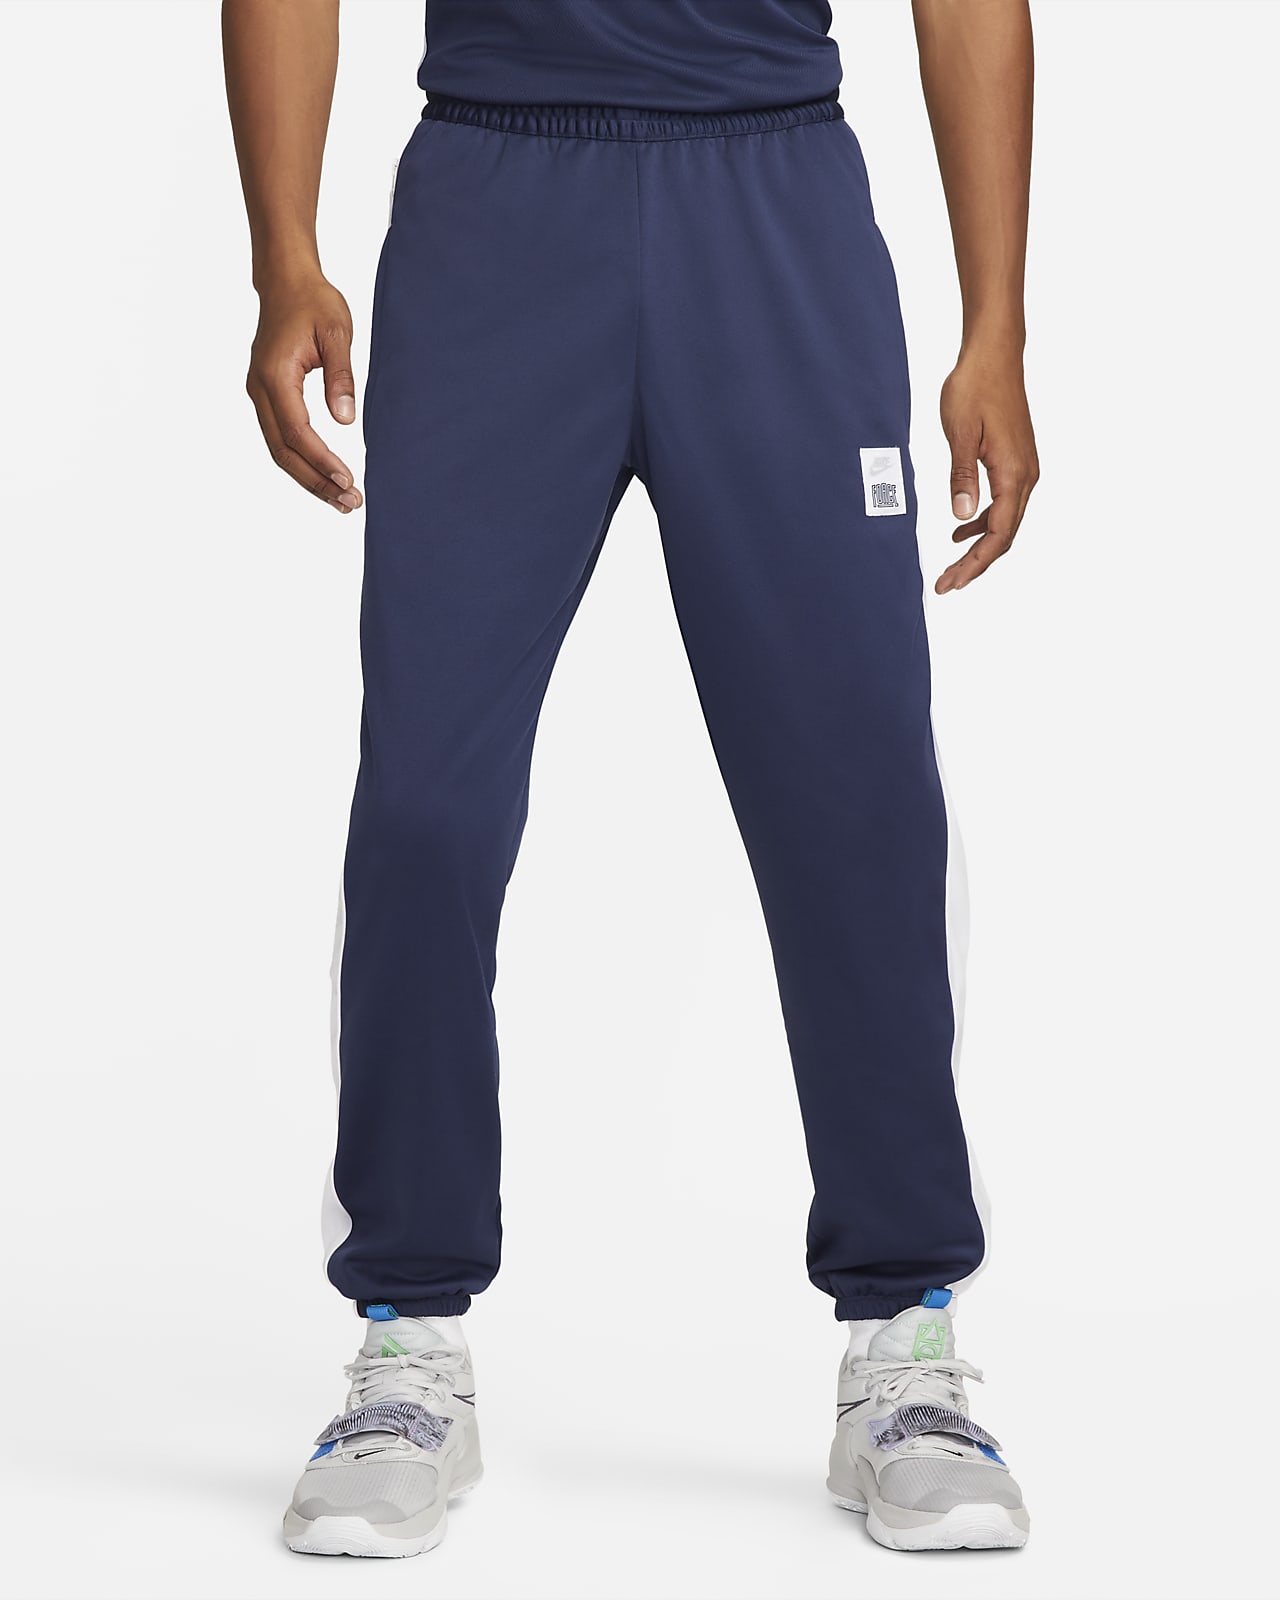 Nike Therma-FIT Starting 5 Men's Basketball Fleece Trousers. Nike NL